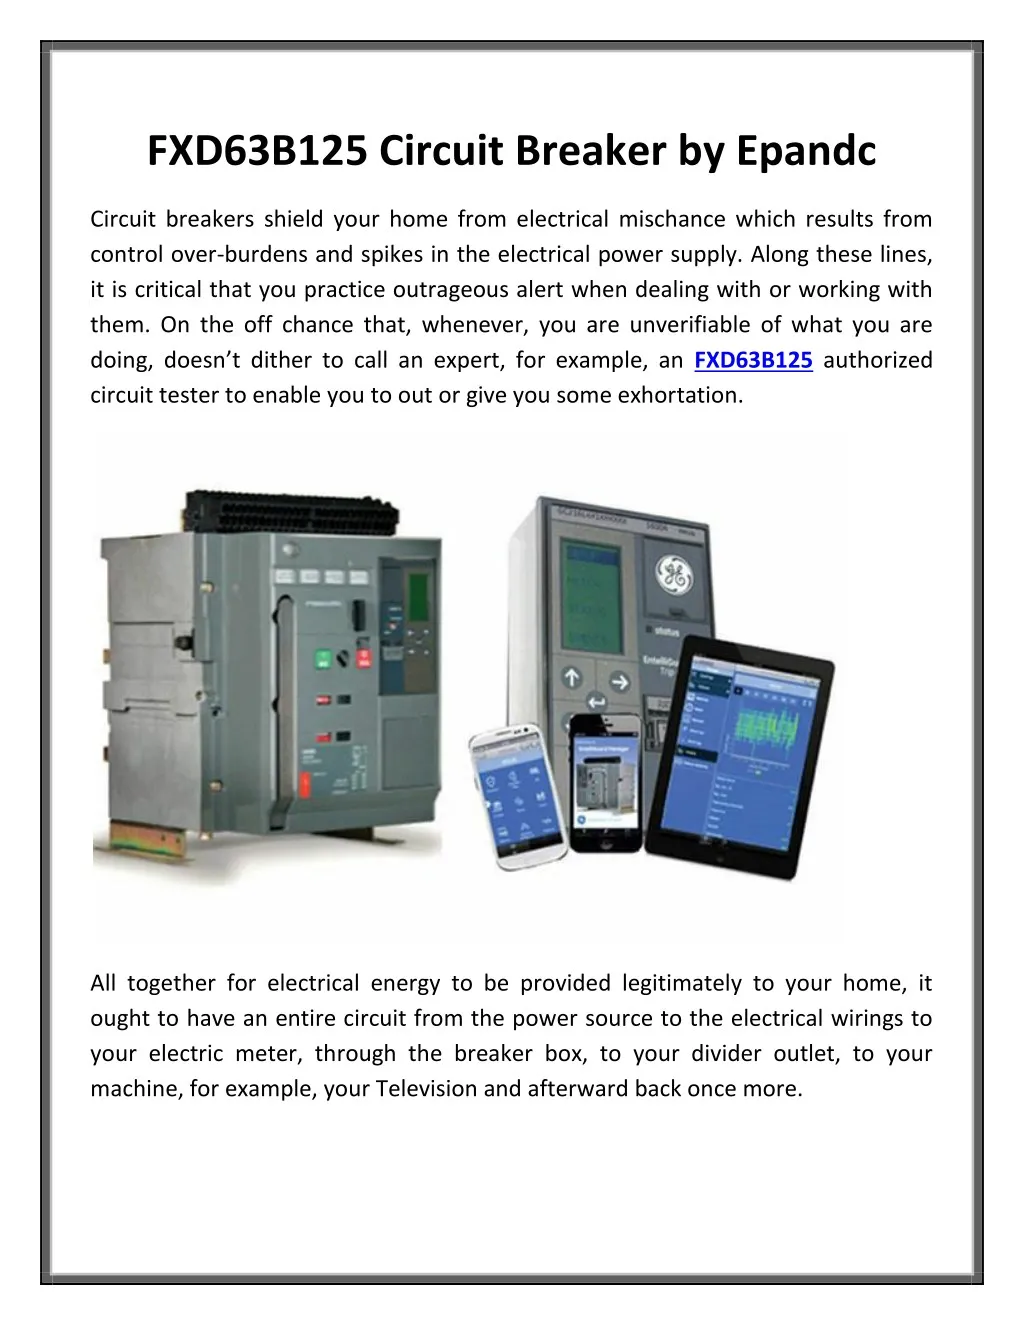 fxd63b125 circuit breaker by epandc